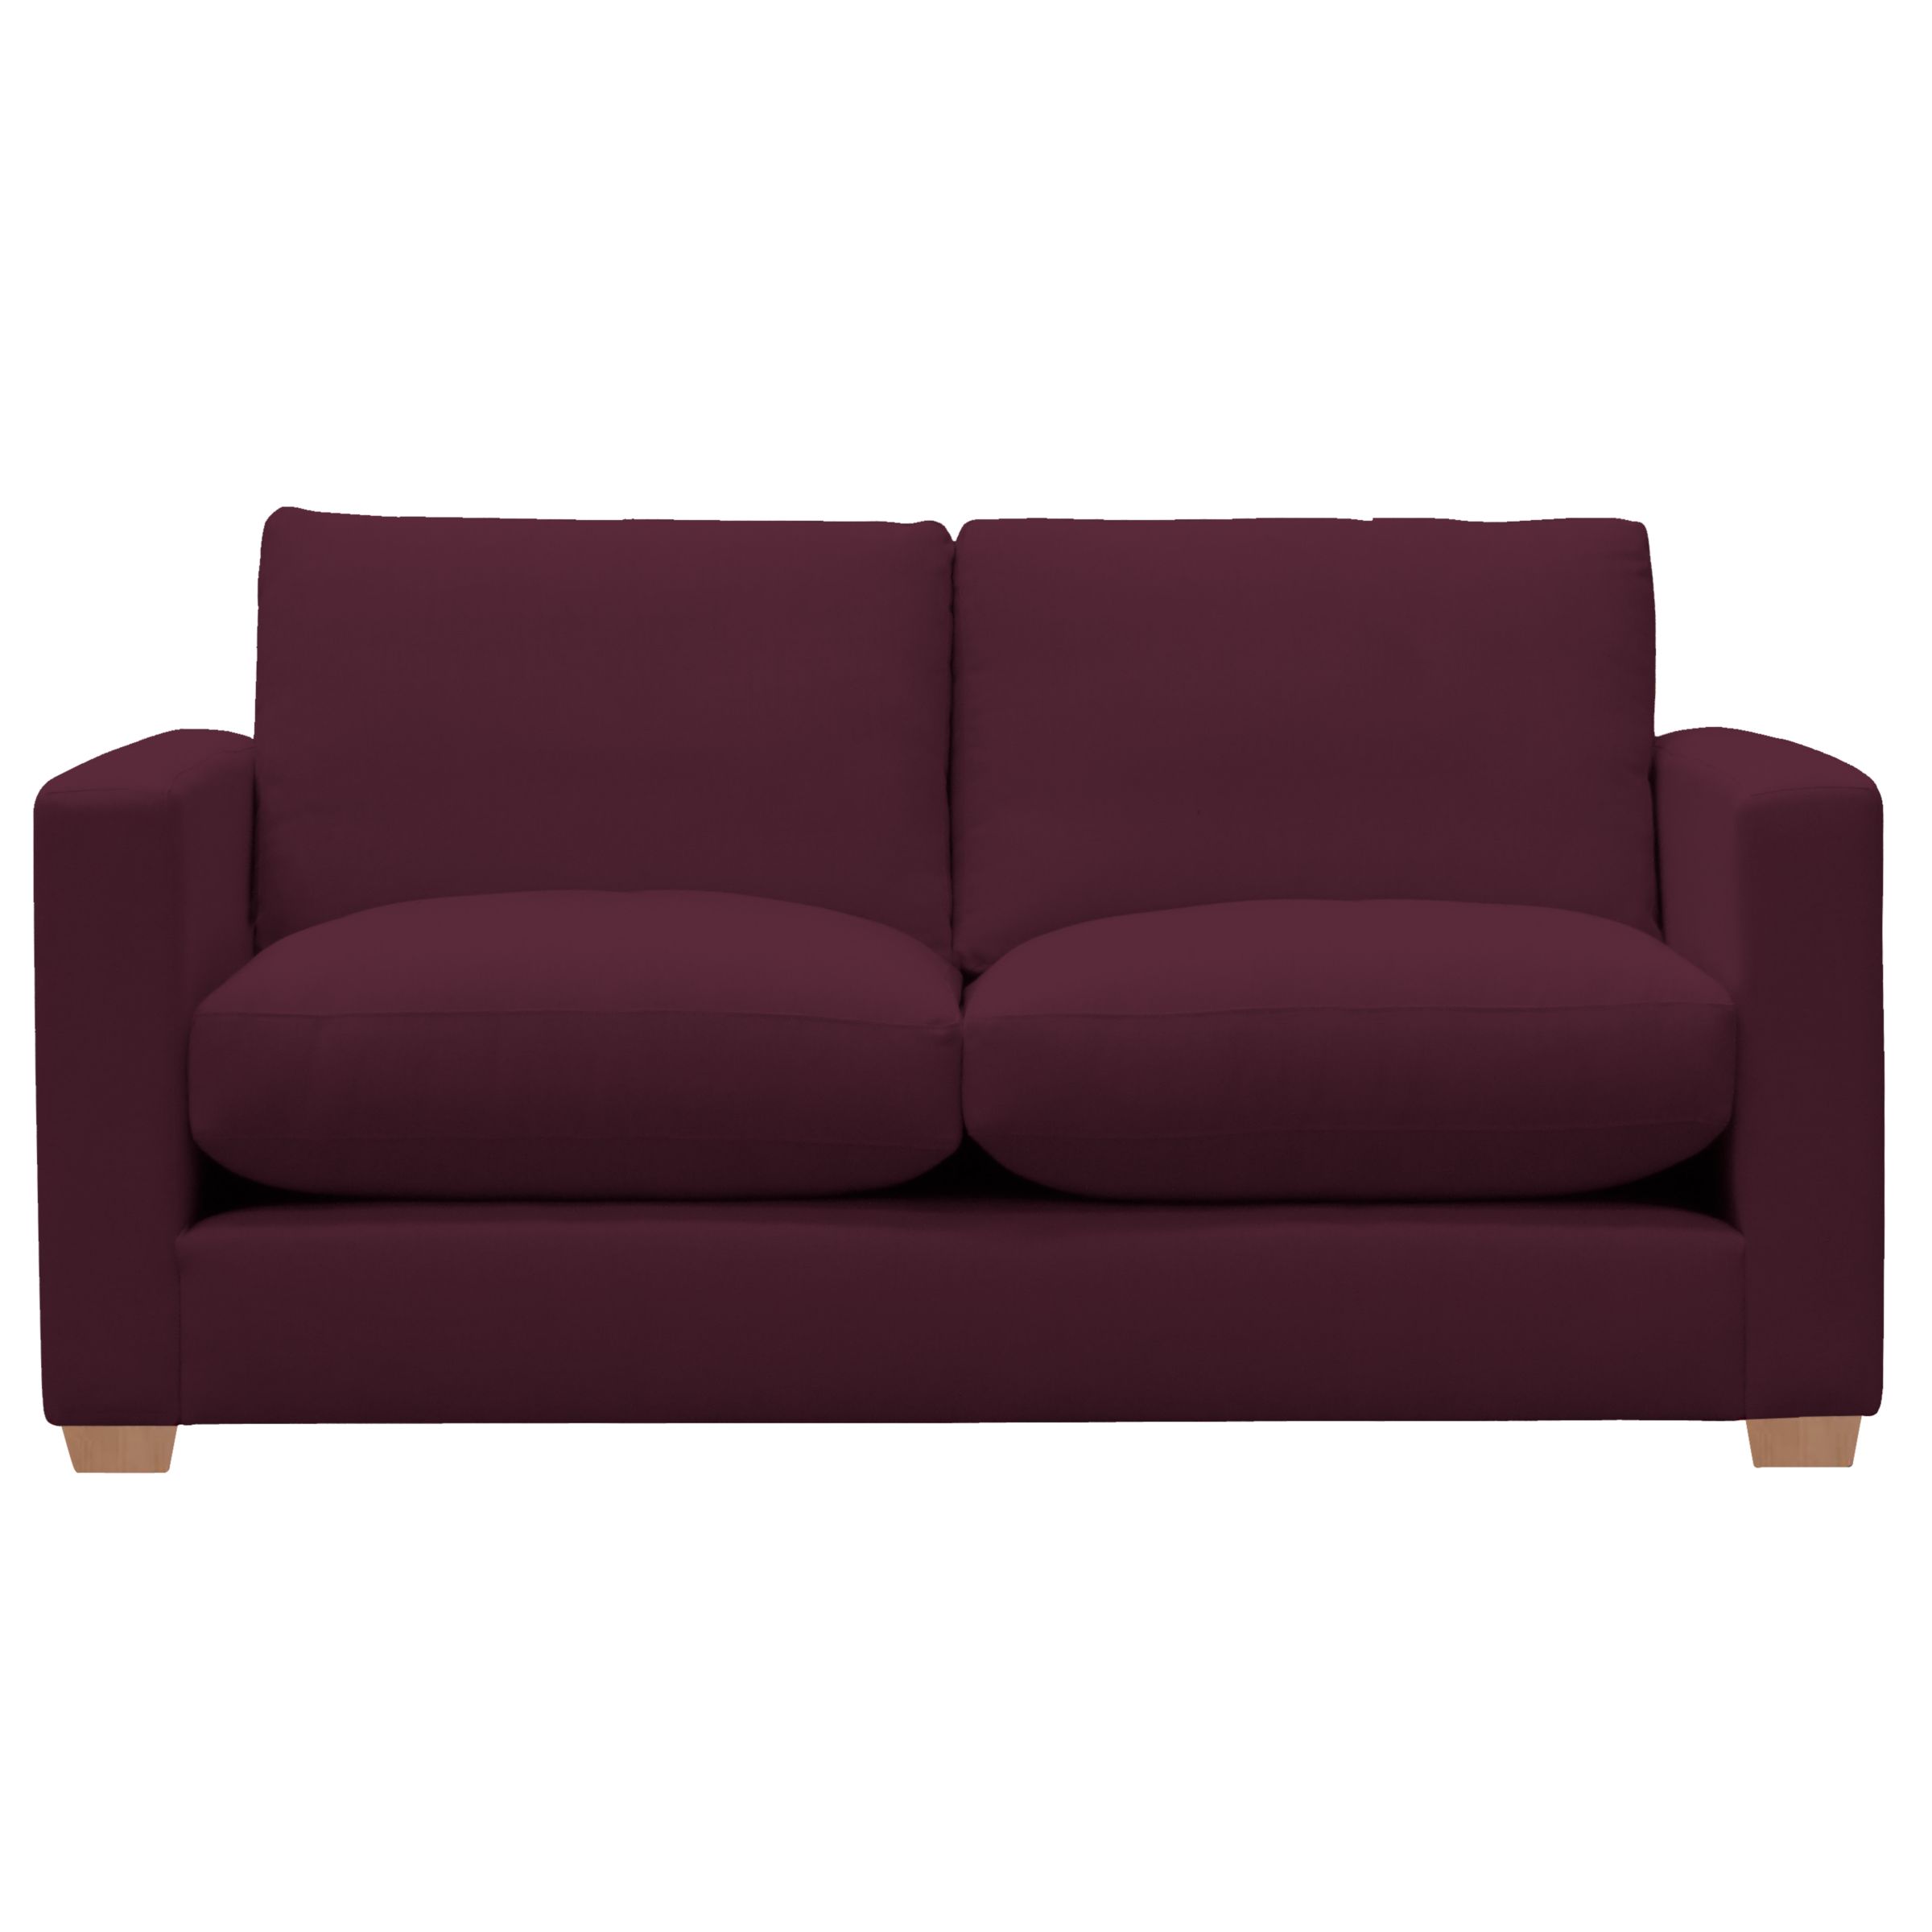 John Lewis Options Slim Arm Medium Sofa, Eaton Cassis, width 183cm